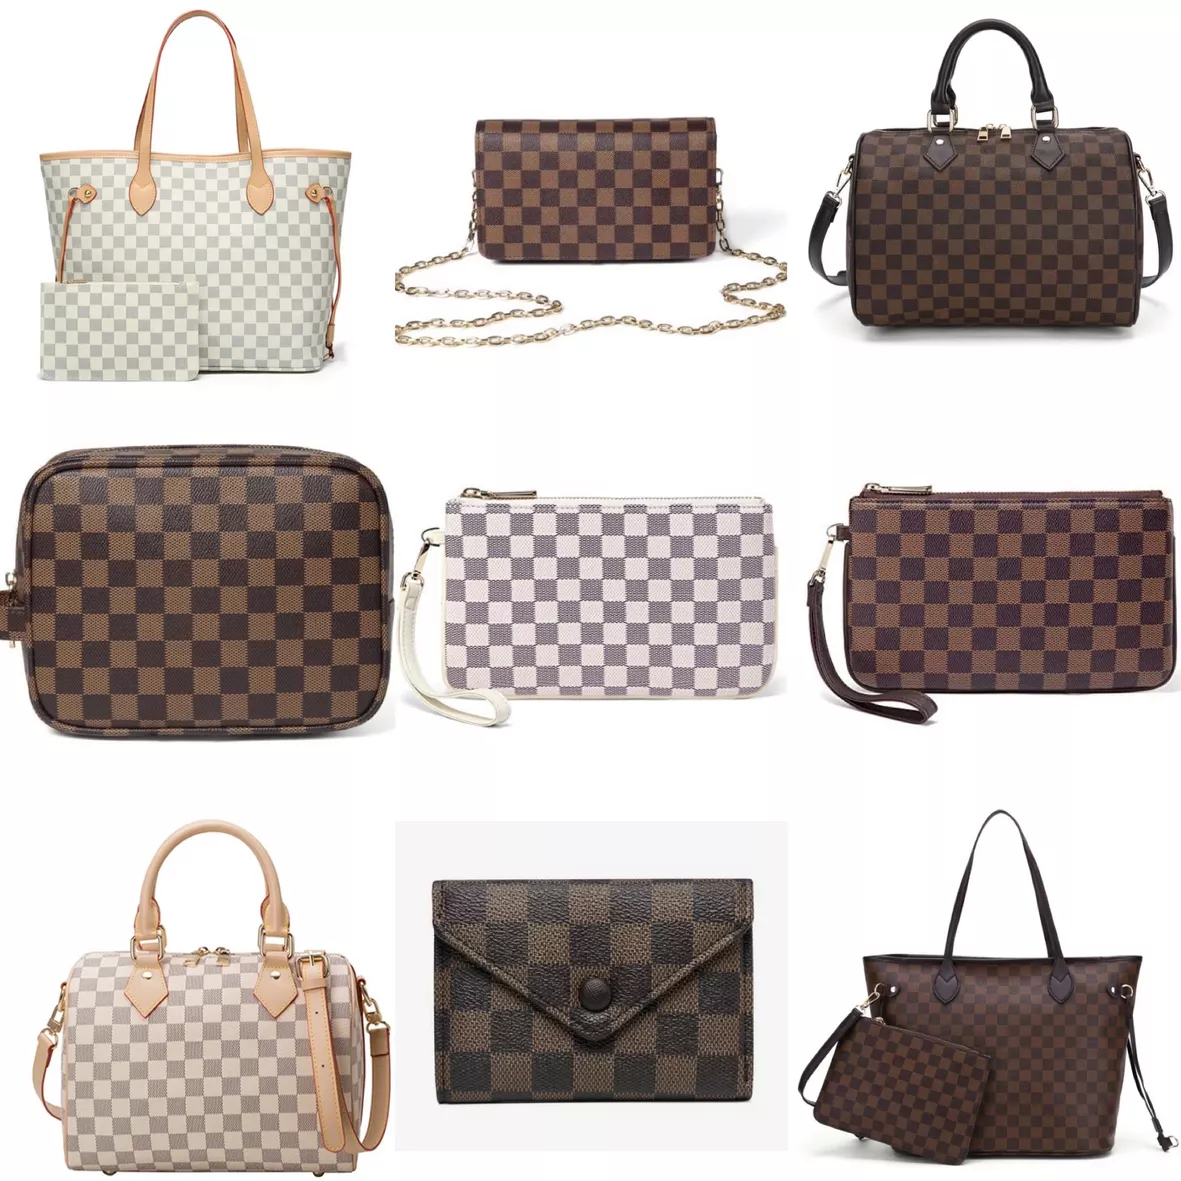 Walmart Designer Inspired Bag, Louis Vuitton Inspired